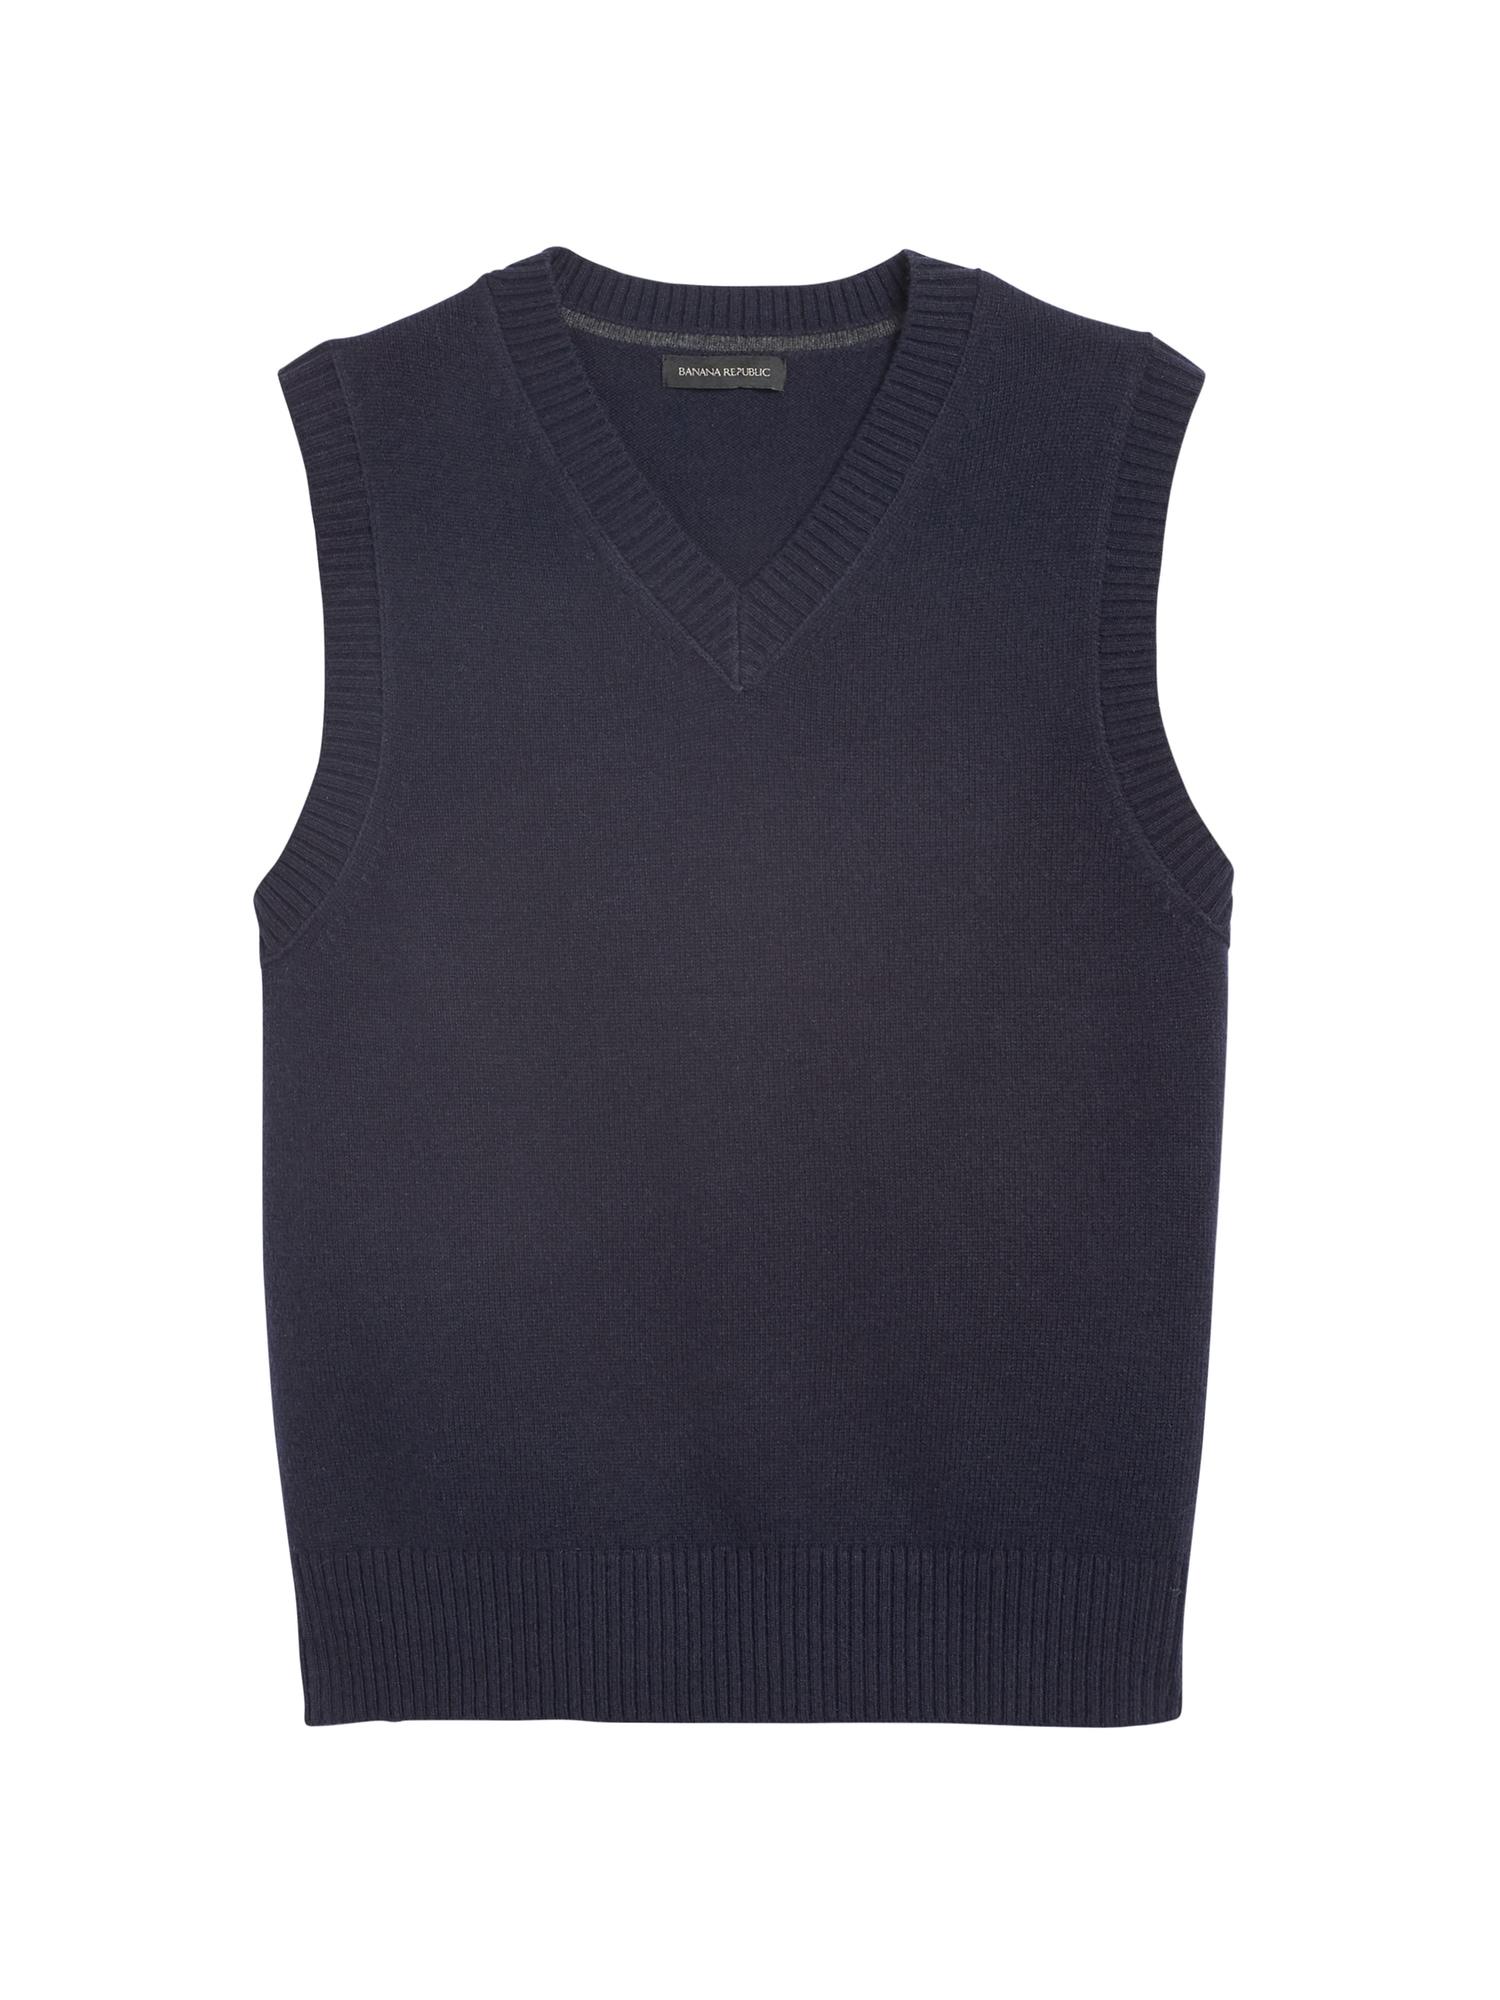 Banana Republic Wool V-neck Sweater Vest in Navy (Blue) for Men - Lyst